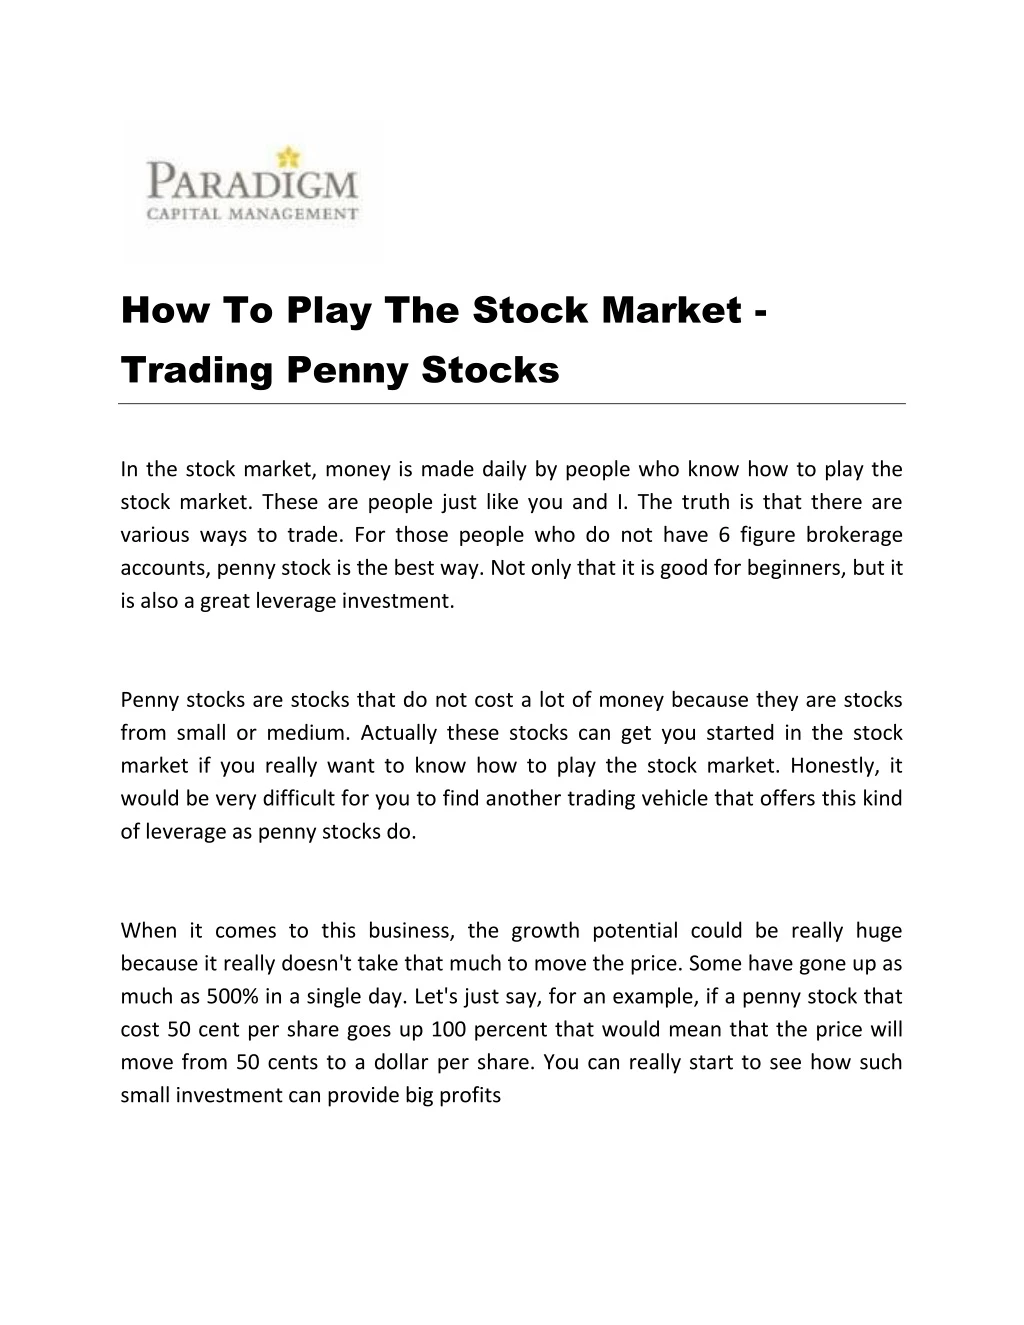 how to play the stock market trading penny stocks